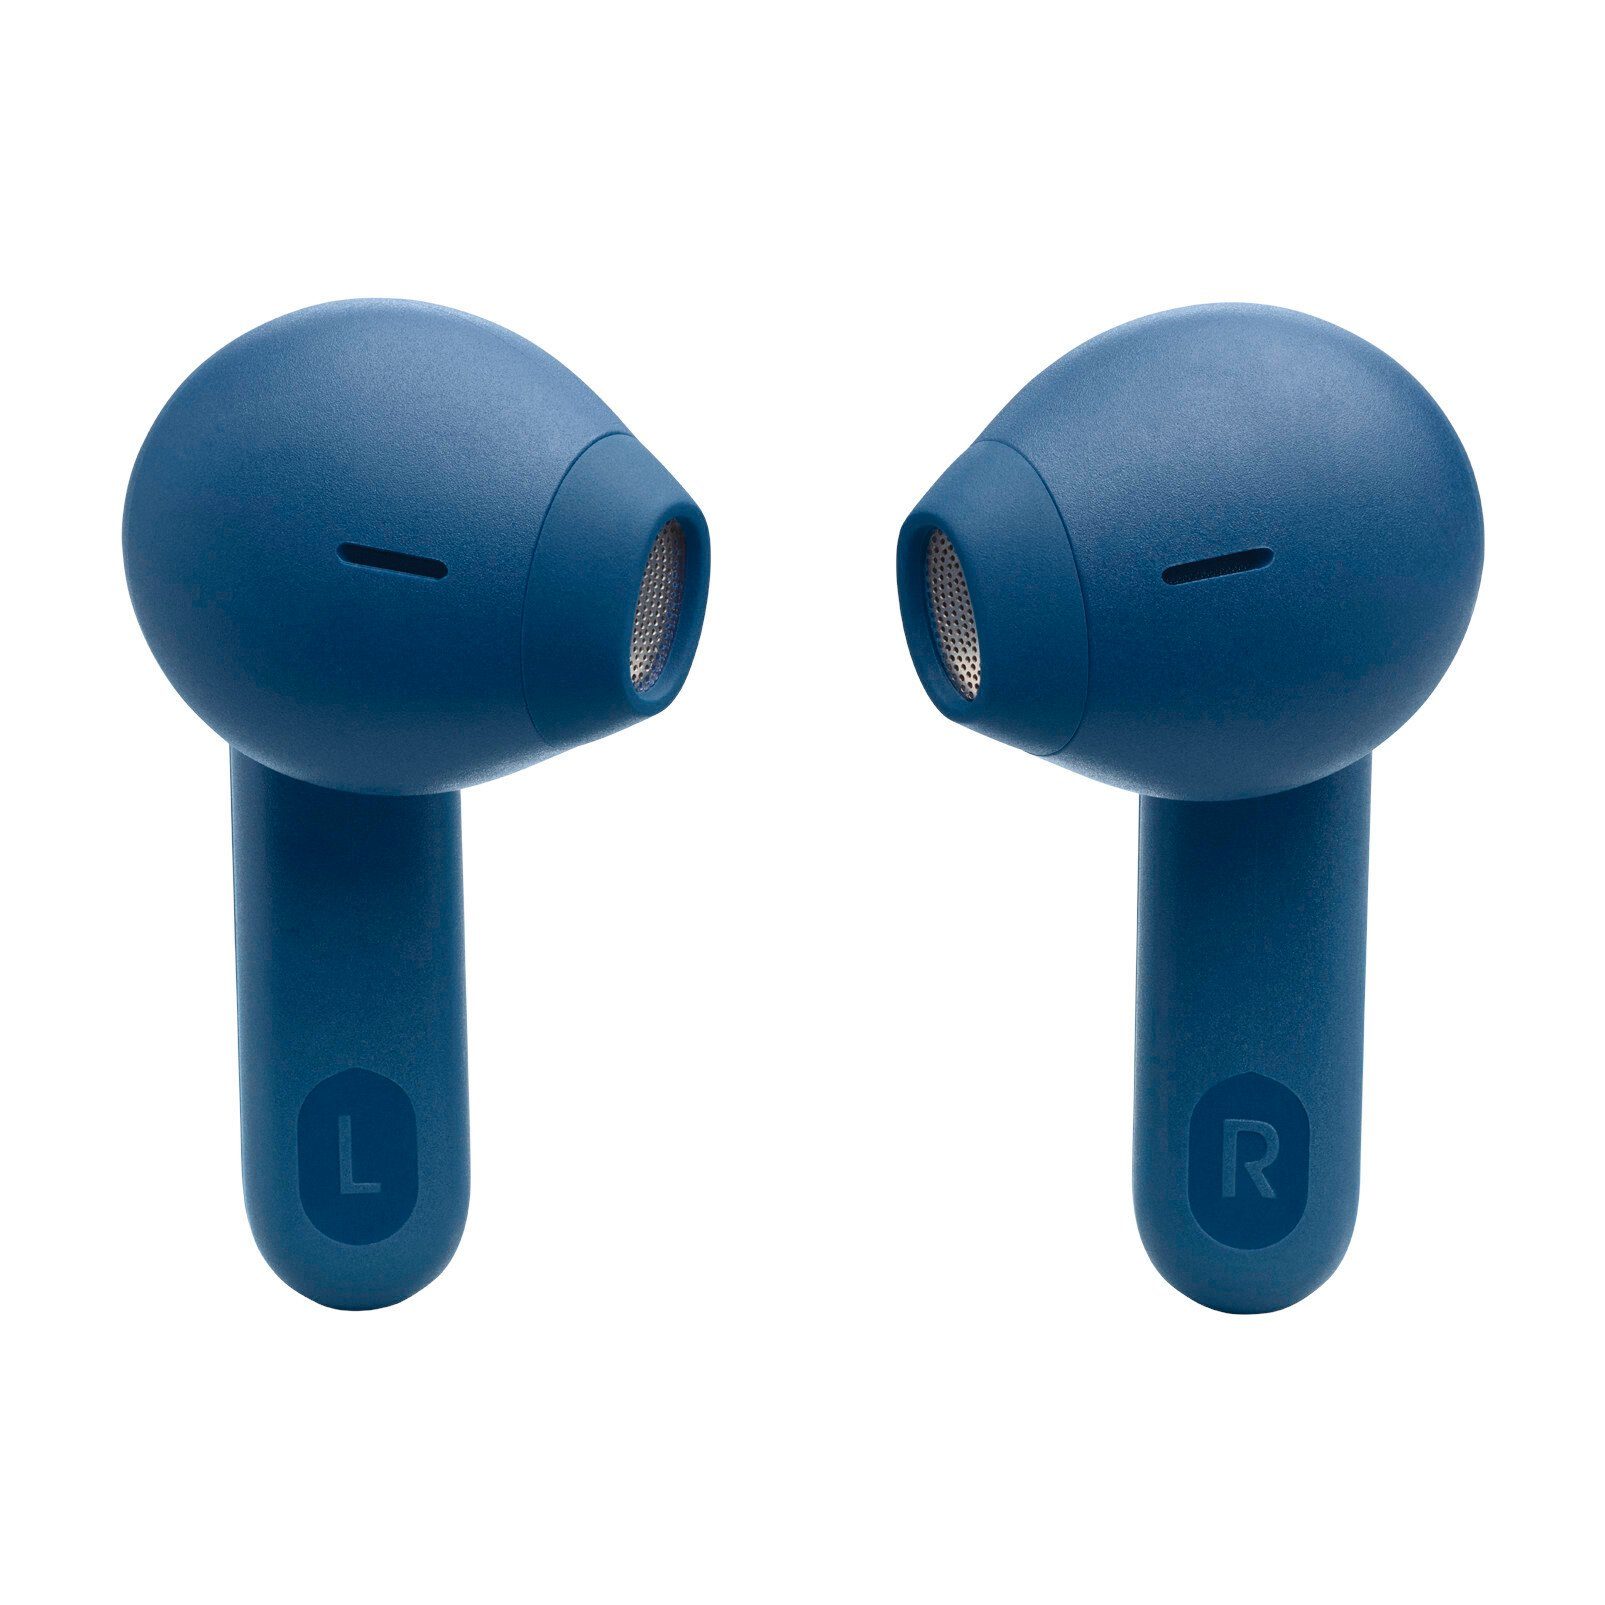 Noise-Cancelling-Ohrhörer kabellose Tune JBL Komplett Flex wireless In-Ear-Kopfhörer,